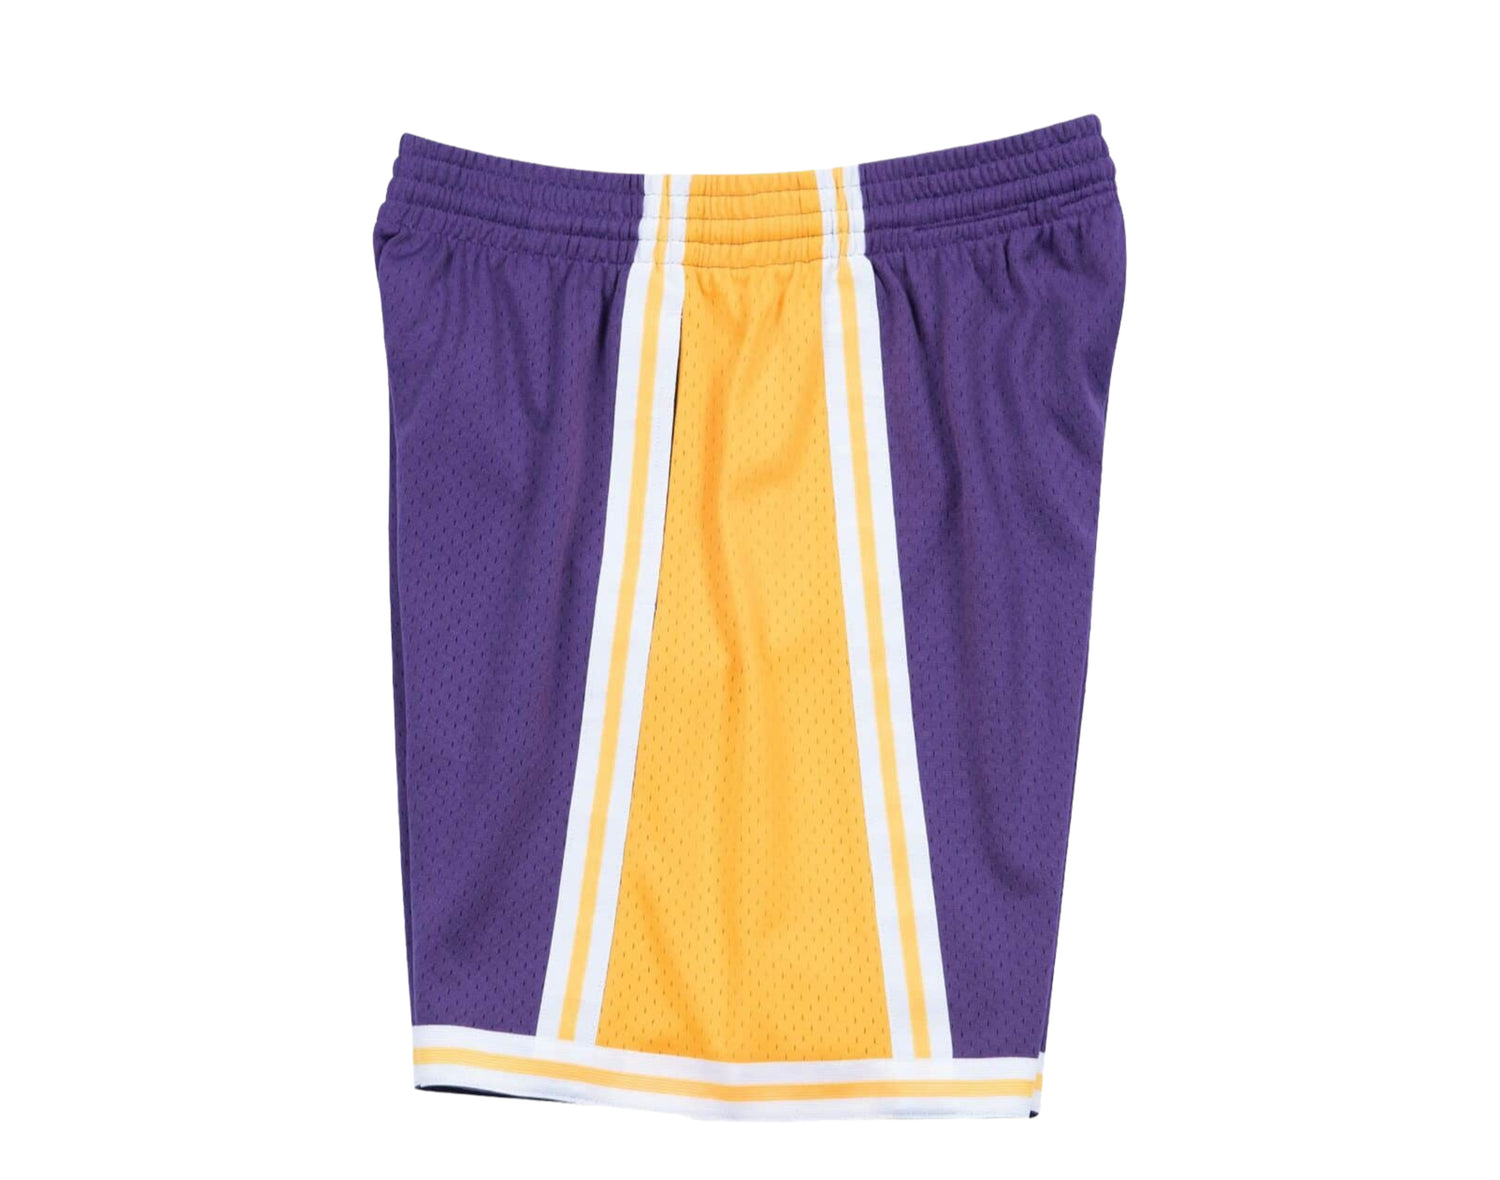 Mitchell & Ness NBA Swingman Los Angeles Lakers Road 1984-85 Men's Shorts